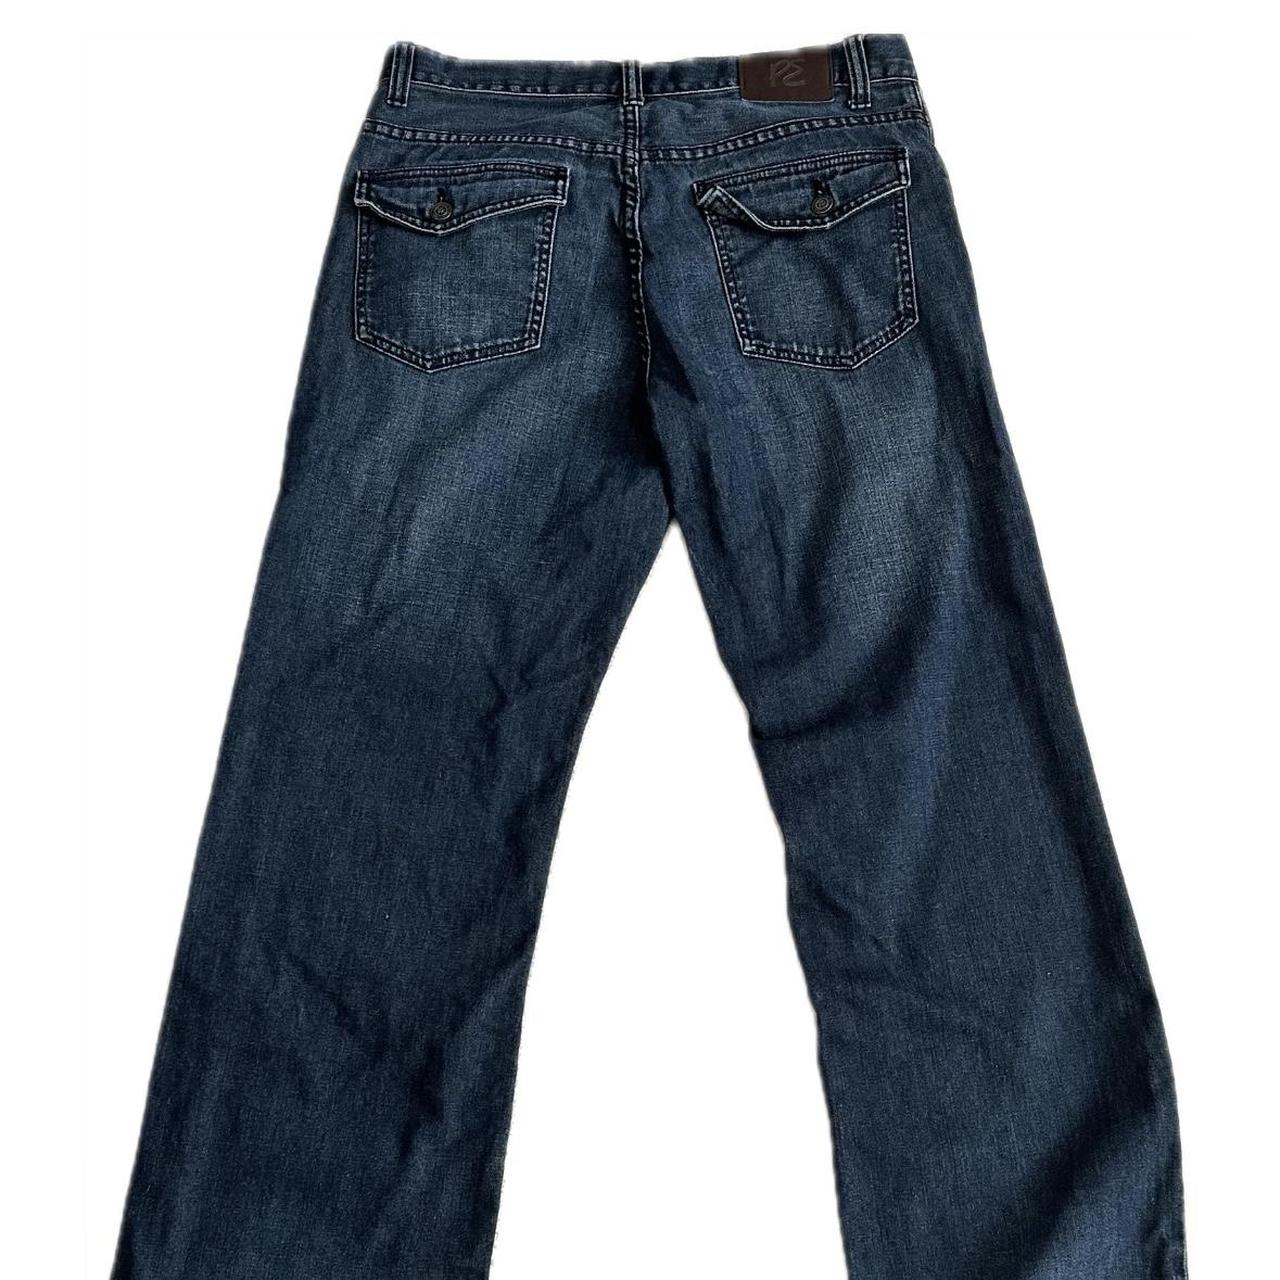 Perry Ellis wide leg jeans, Size 33x30